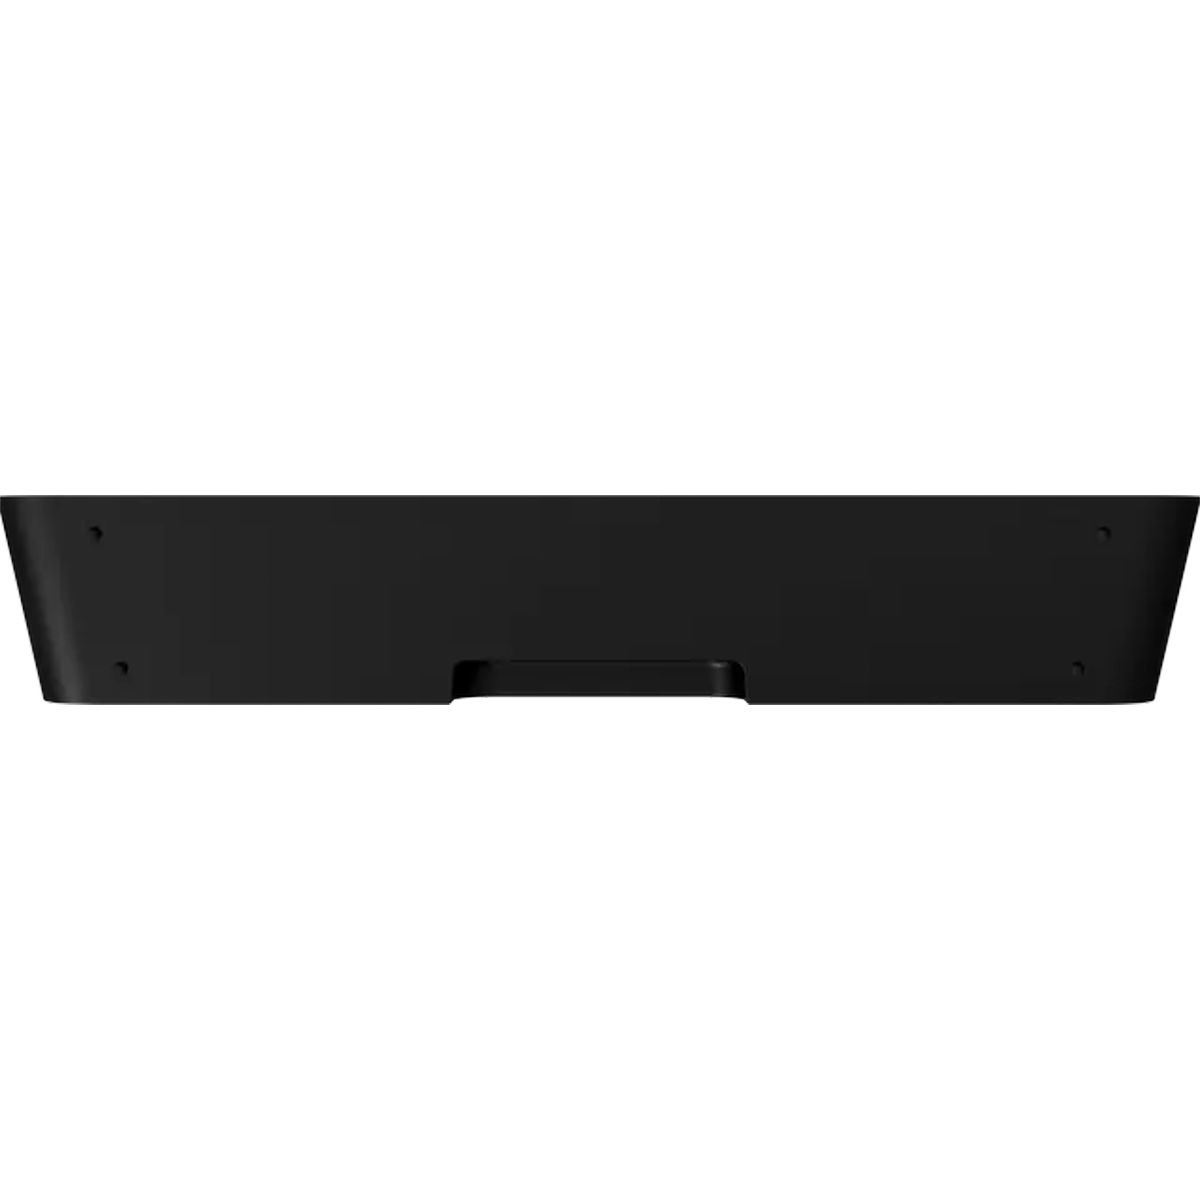 Sonos Ray Compact Soundbar - Black - bottom view